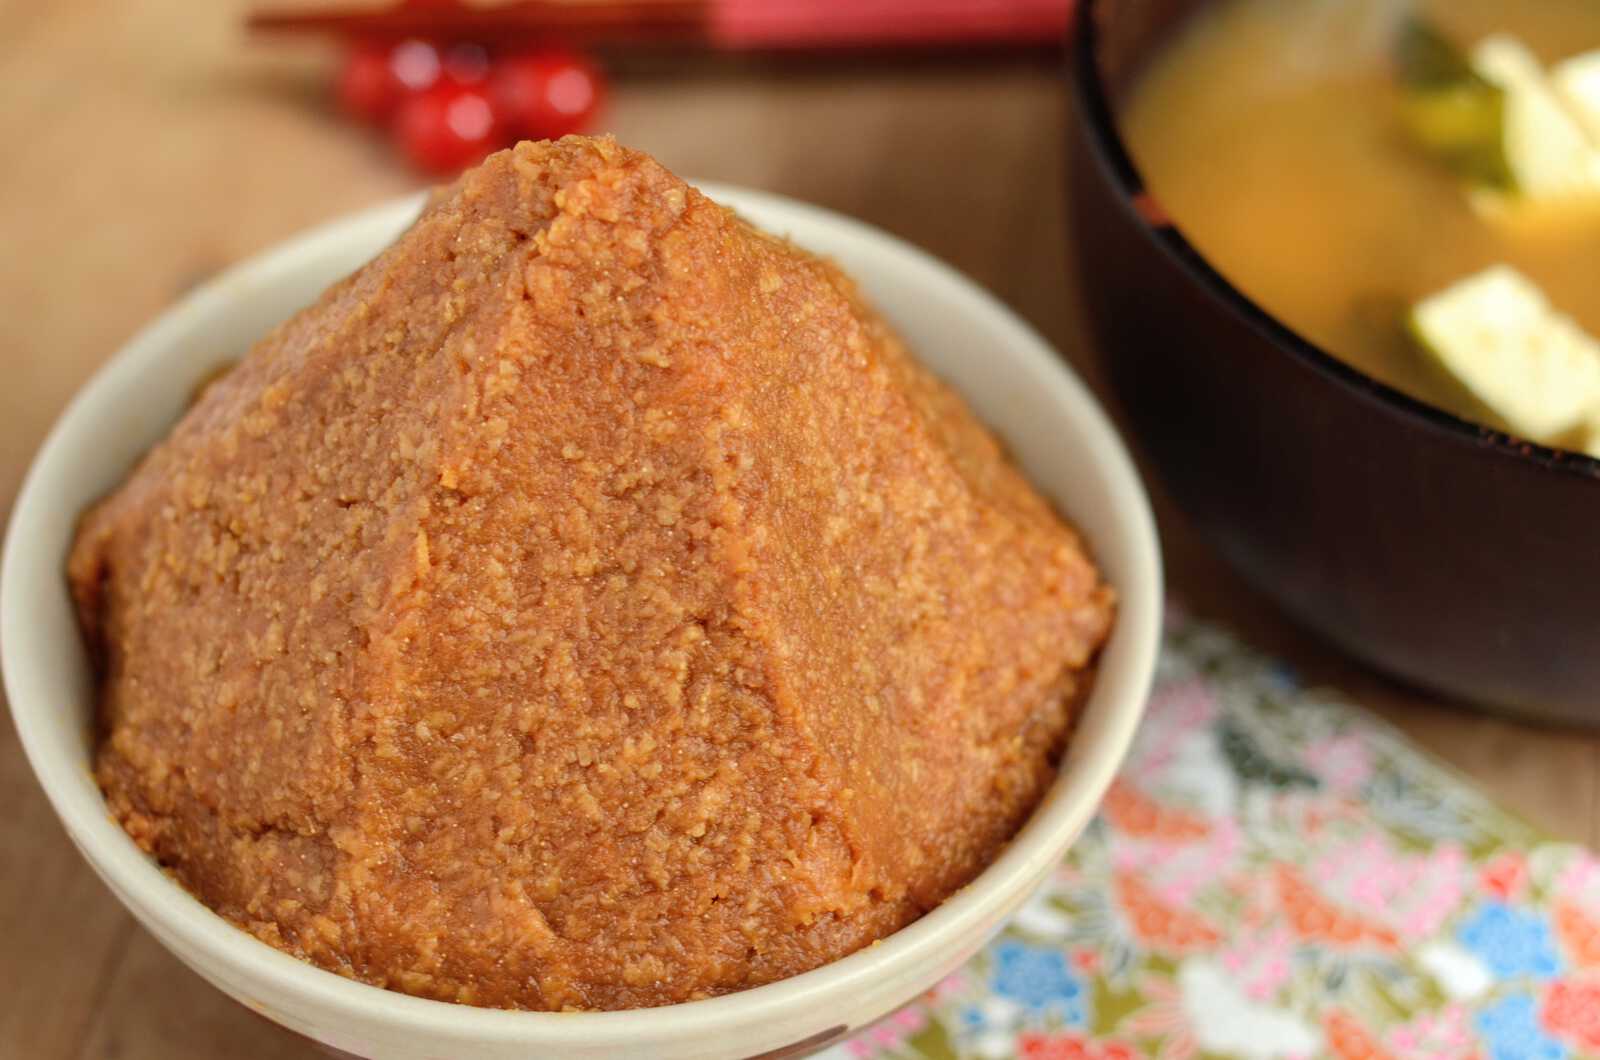 Miso - Comment faire sa pâte miso maison, selon la tradition